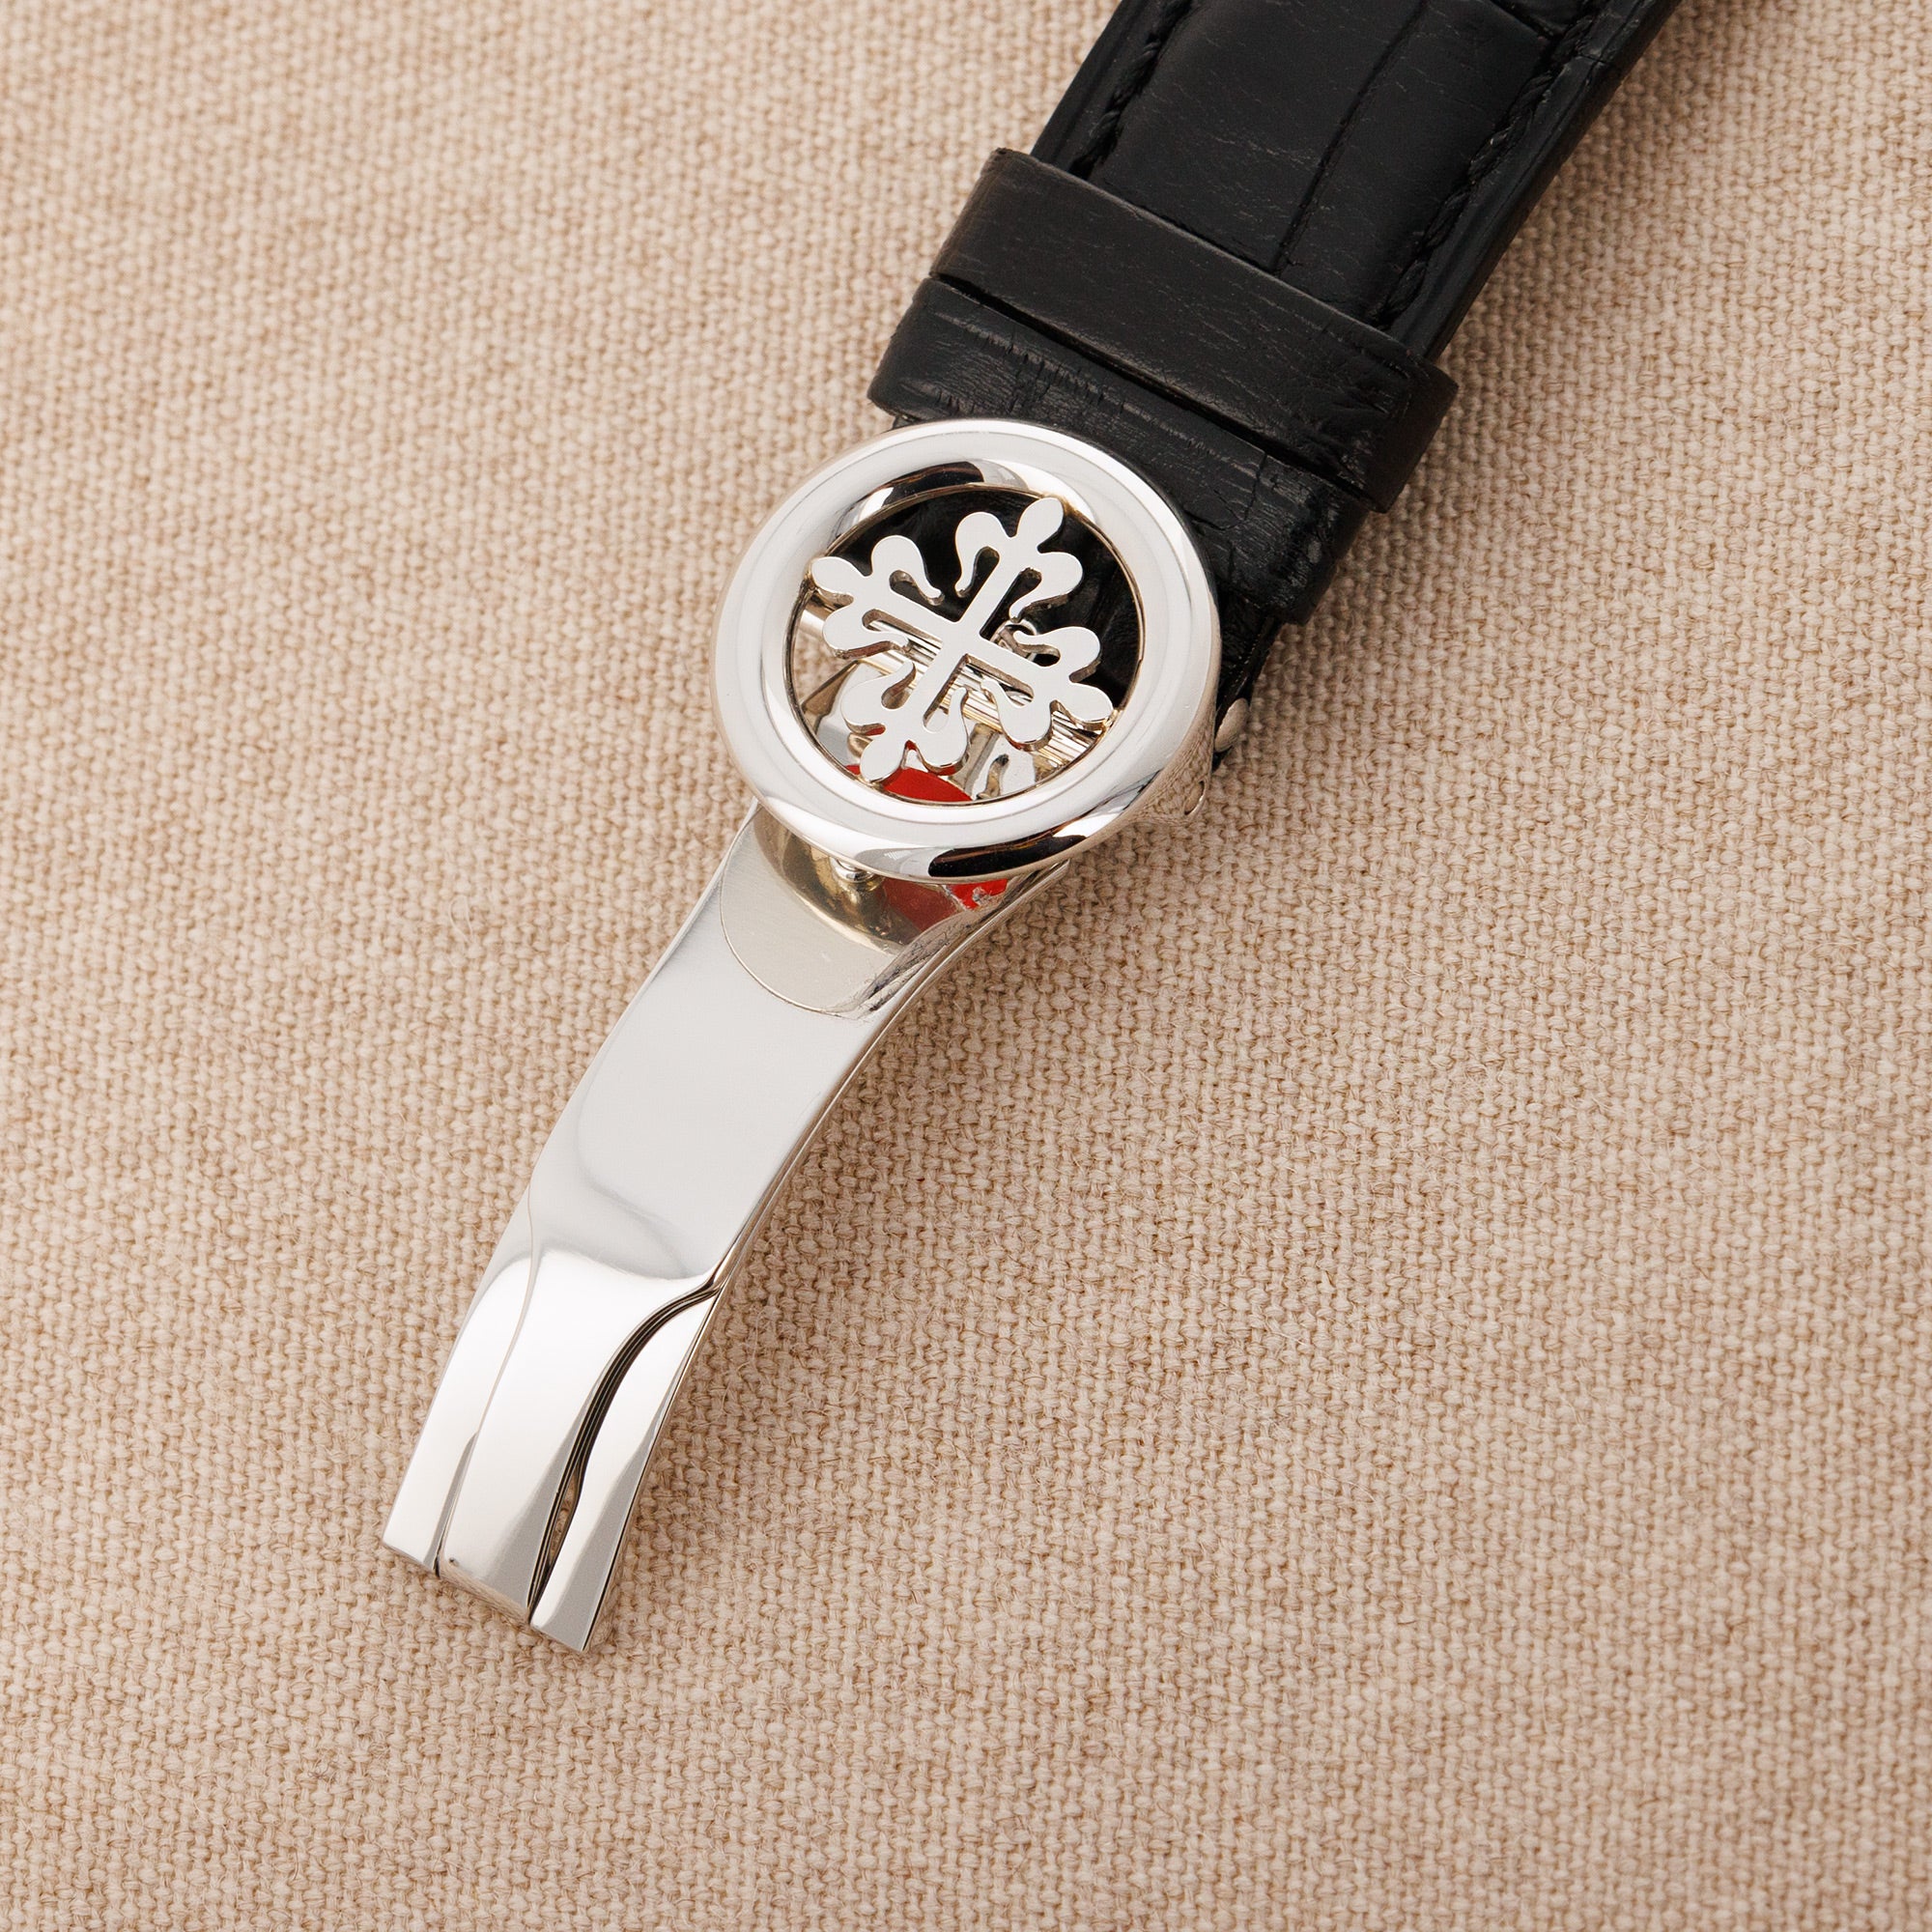 Patek Philippe - Patek Philippe Platinum Perpetual Calendar Watch Ref. 5970 - The Keystone Watches